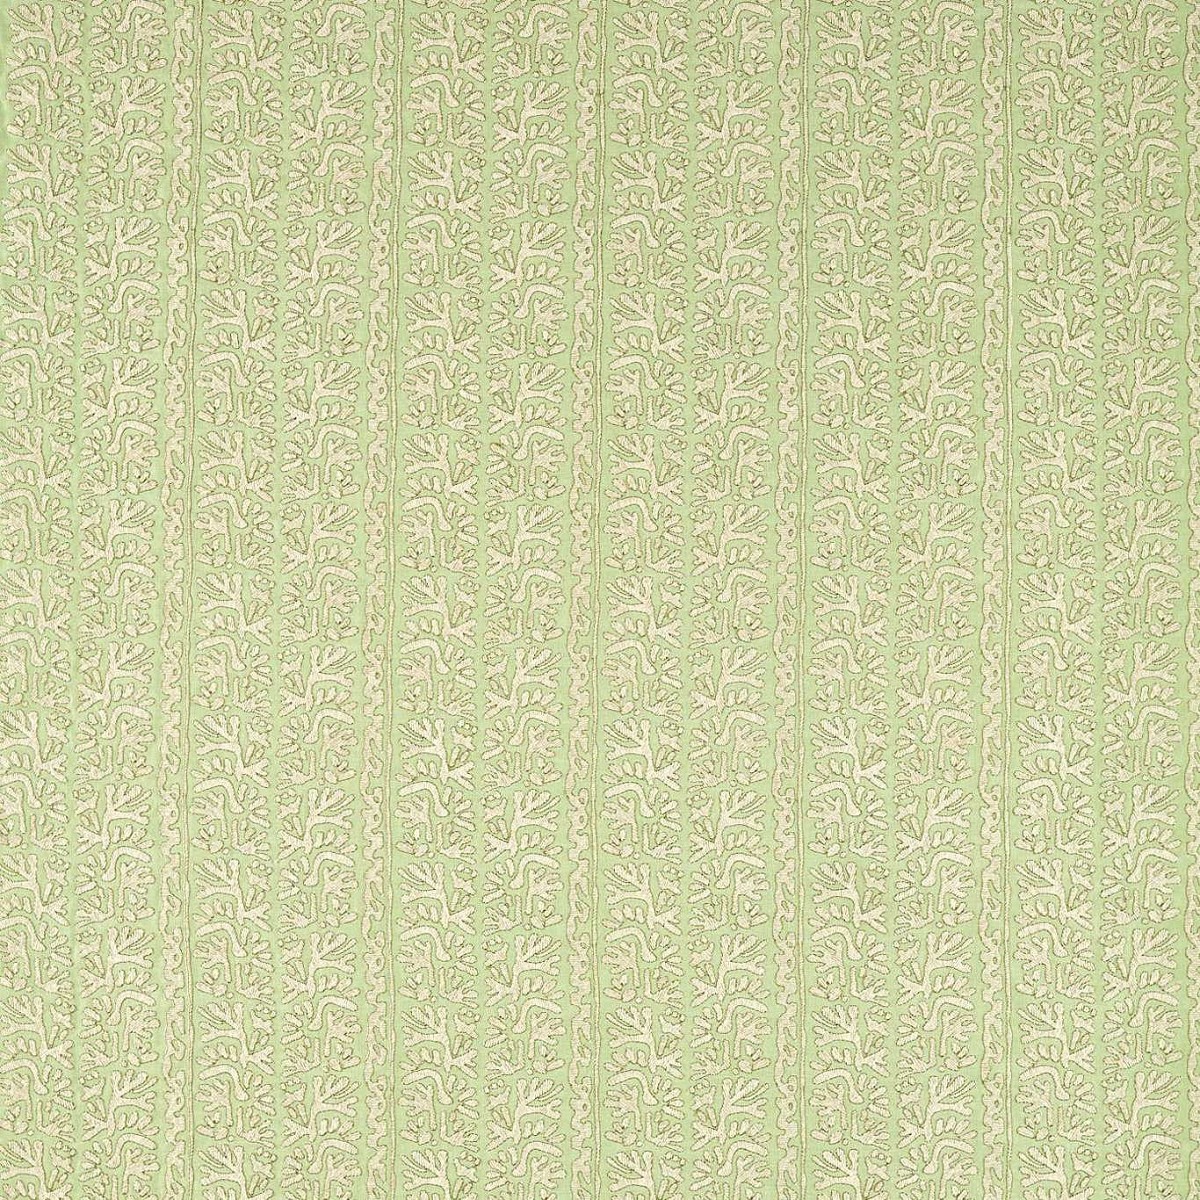 Khorol Sage/Shiitake Fabric by Harlequin